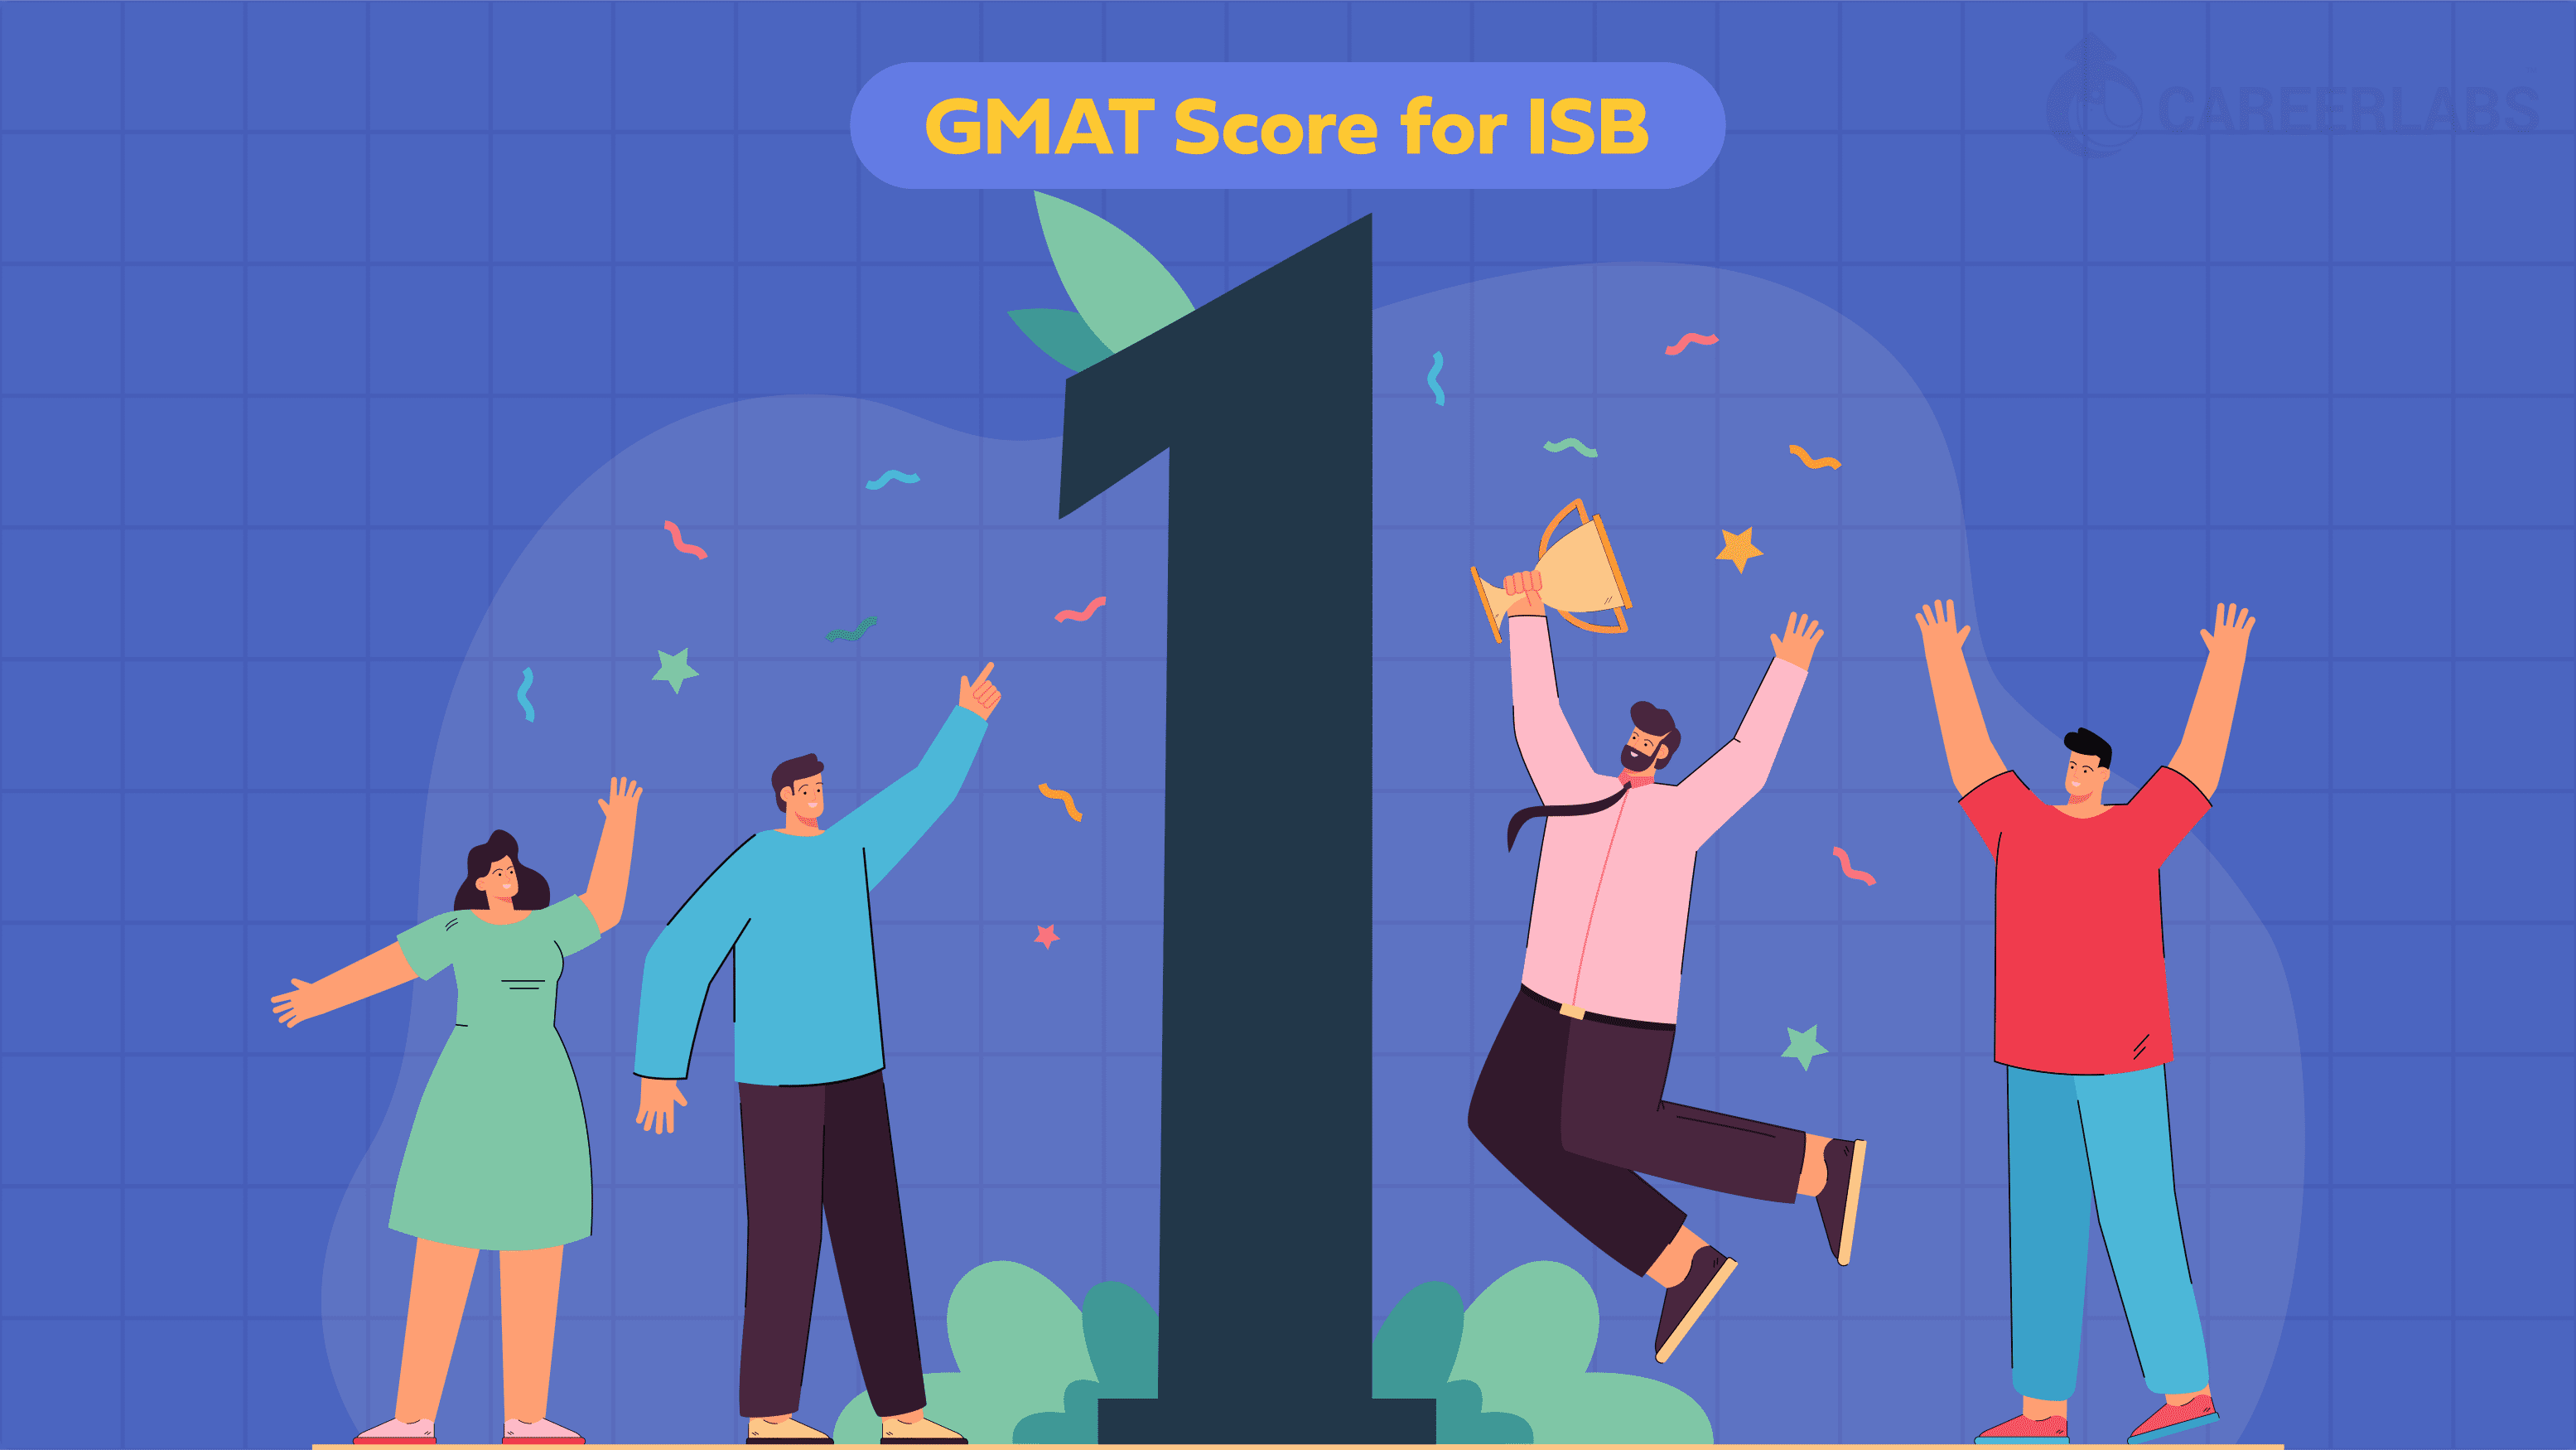 GMAT Score for ISB